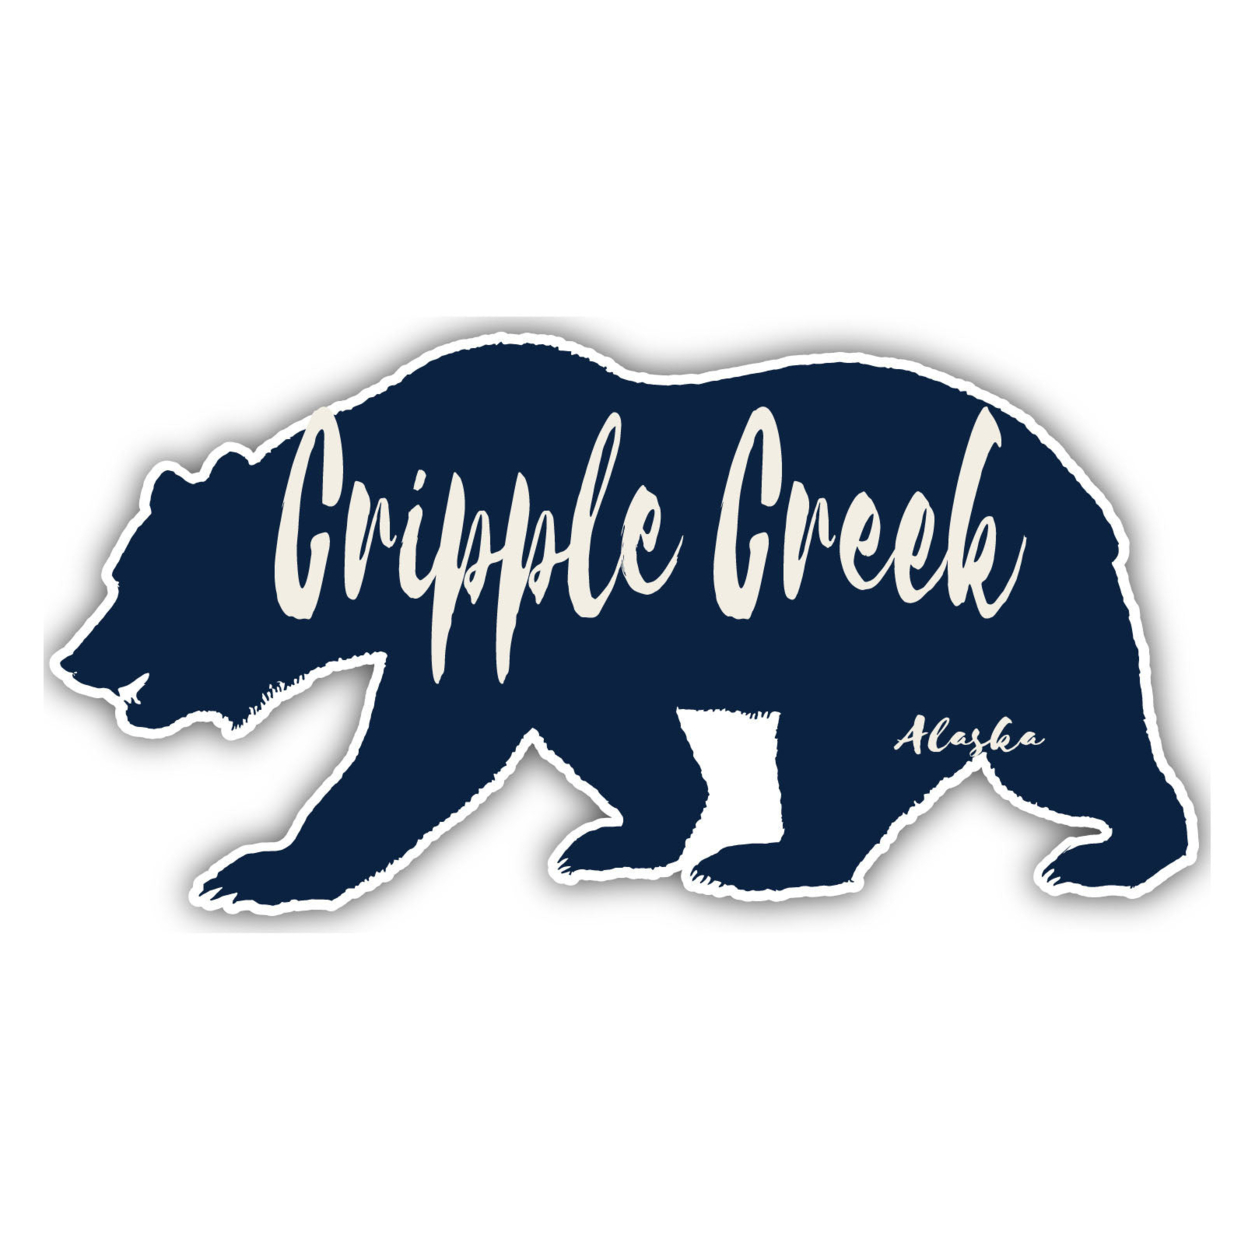 Cripple Creek Alaska Souvenir Decorative Stickers (Choose Theme And Size) - 4-Pack, 12-Inch, Bear